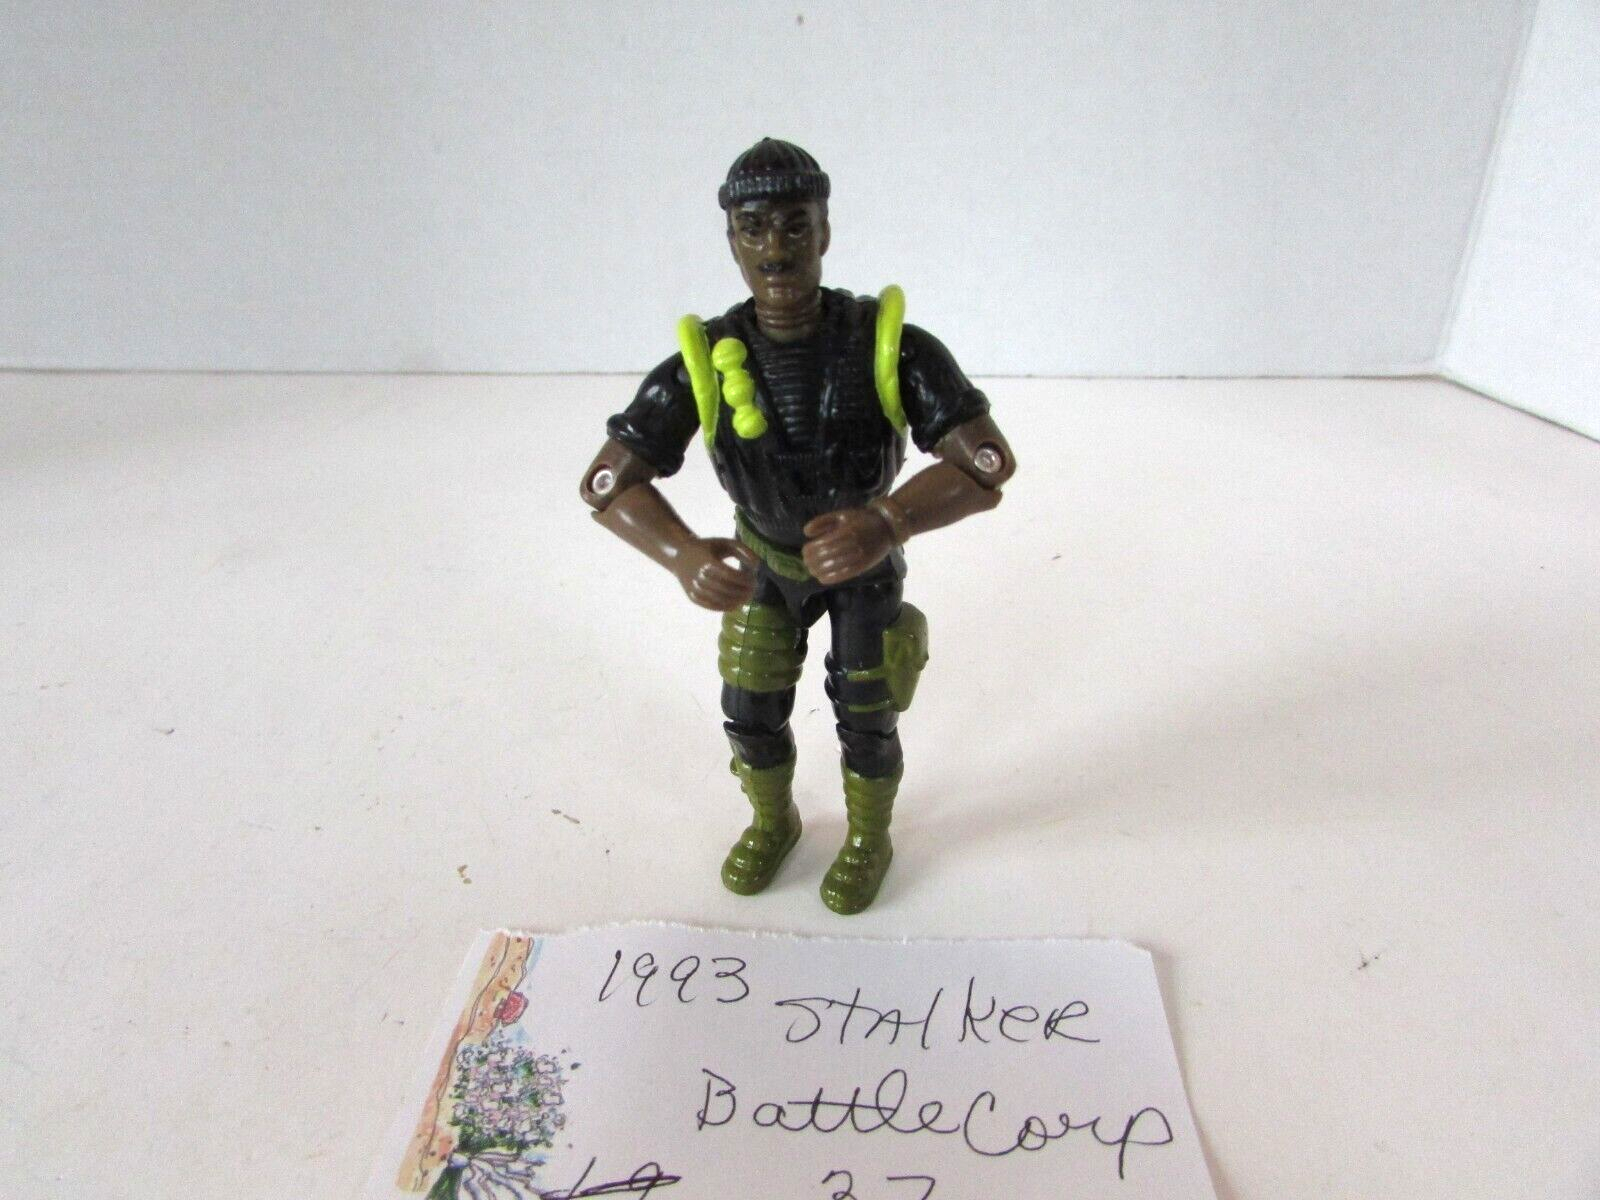 Primary image for Hasbro GI Joe Action Figure Battle Corp Stalker 1993